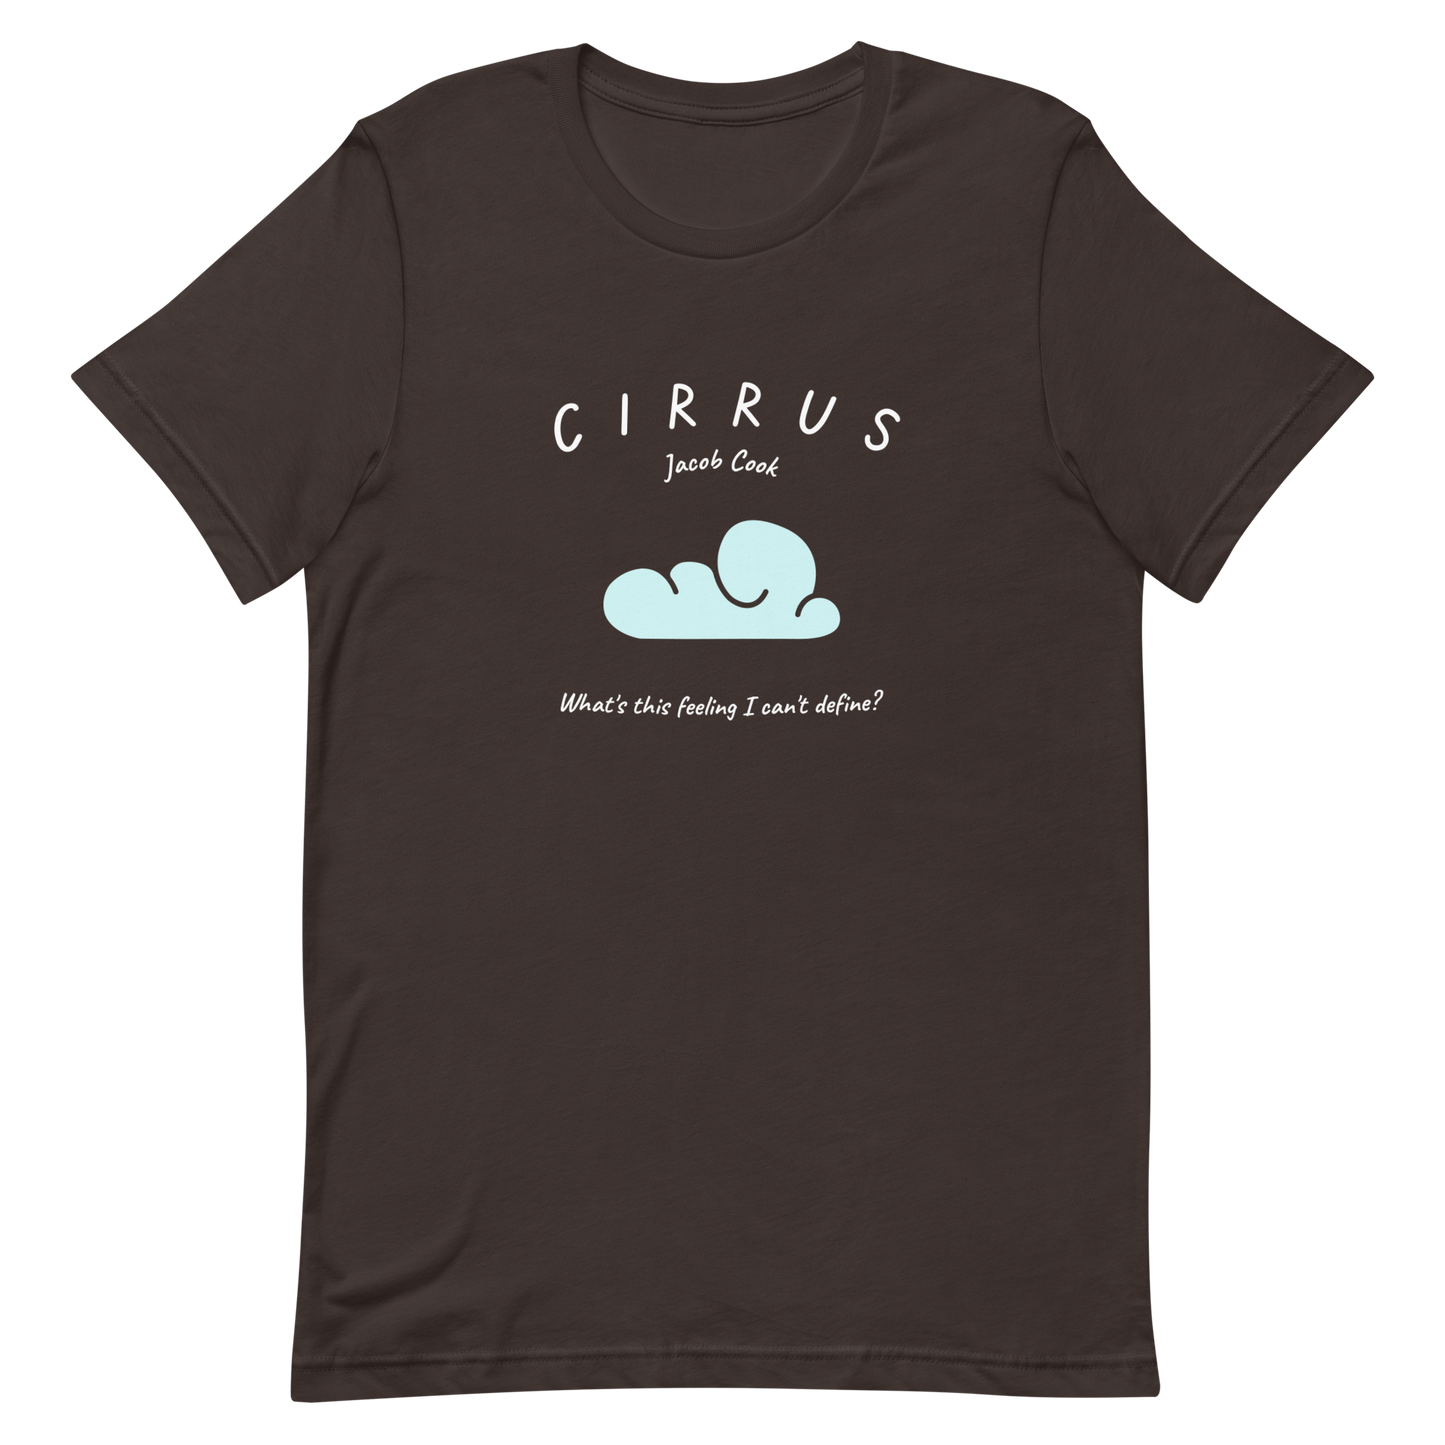 Cirrus T-shirt